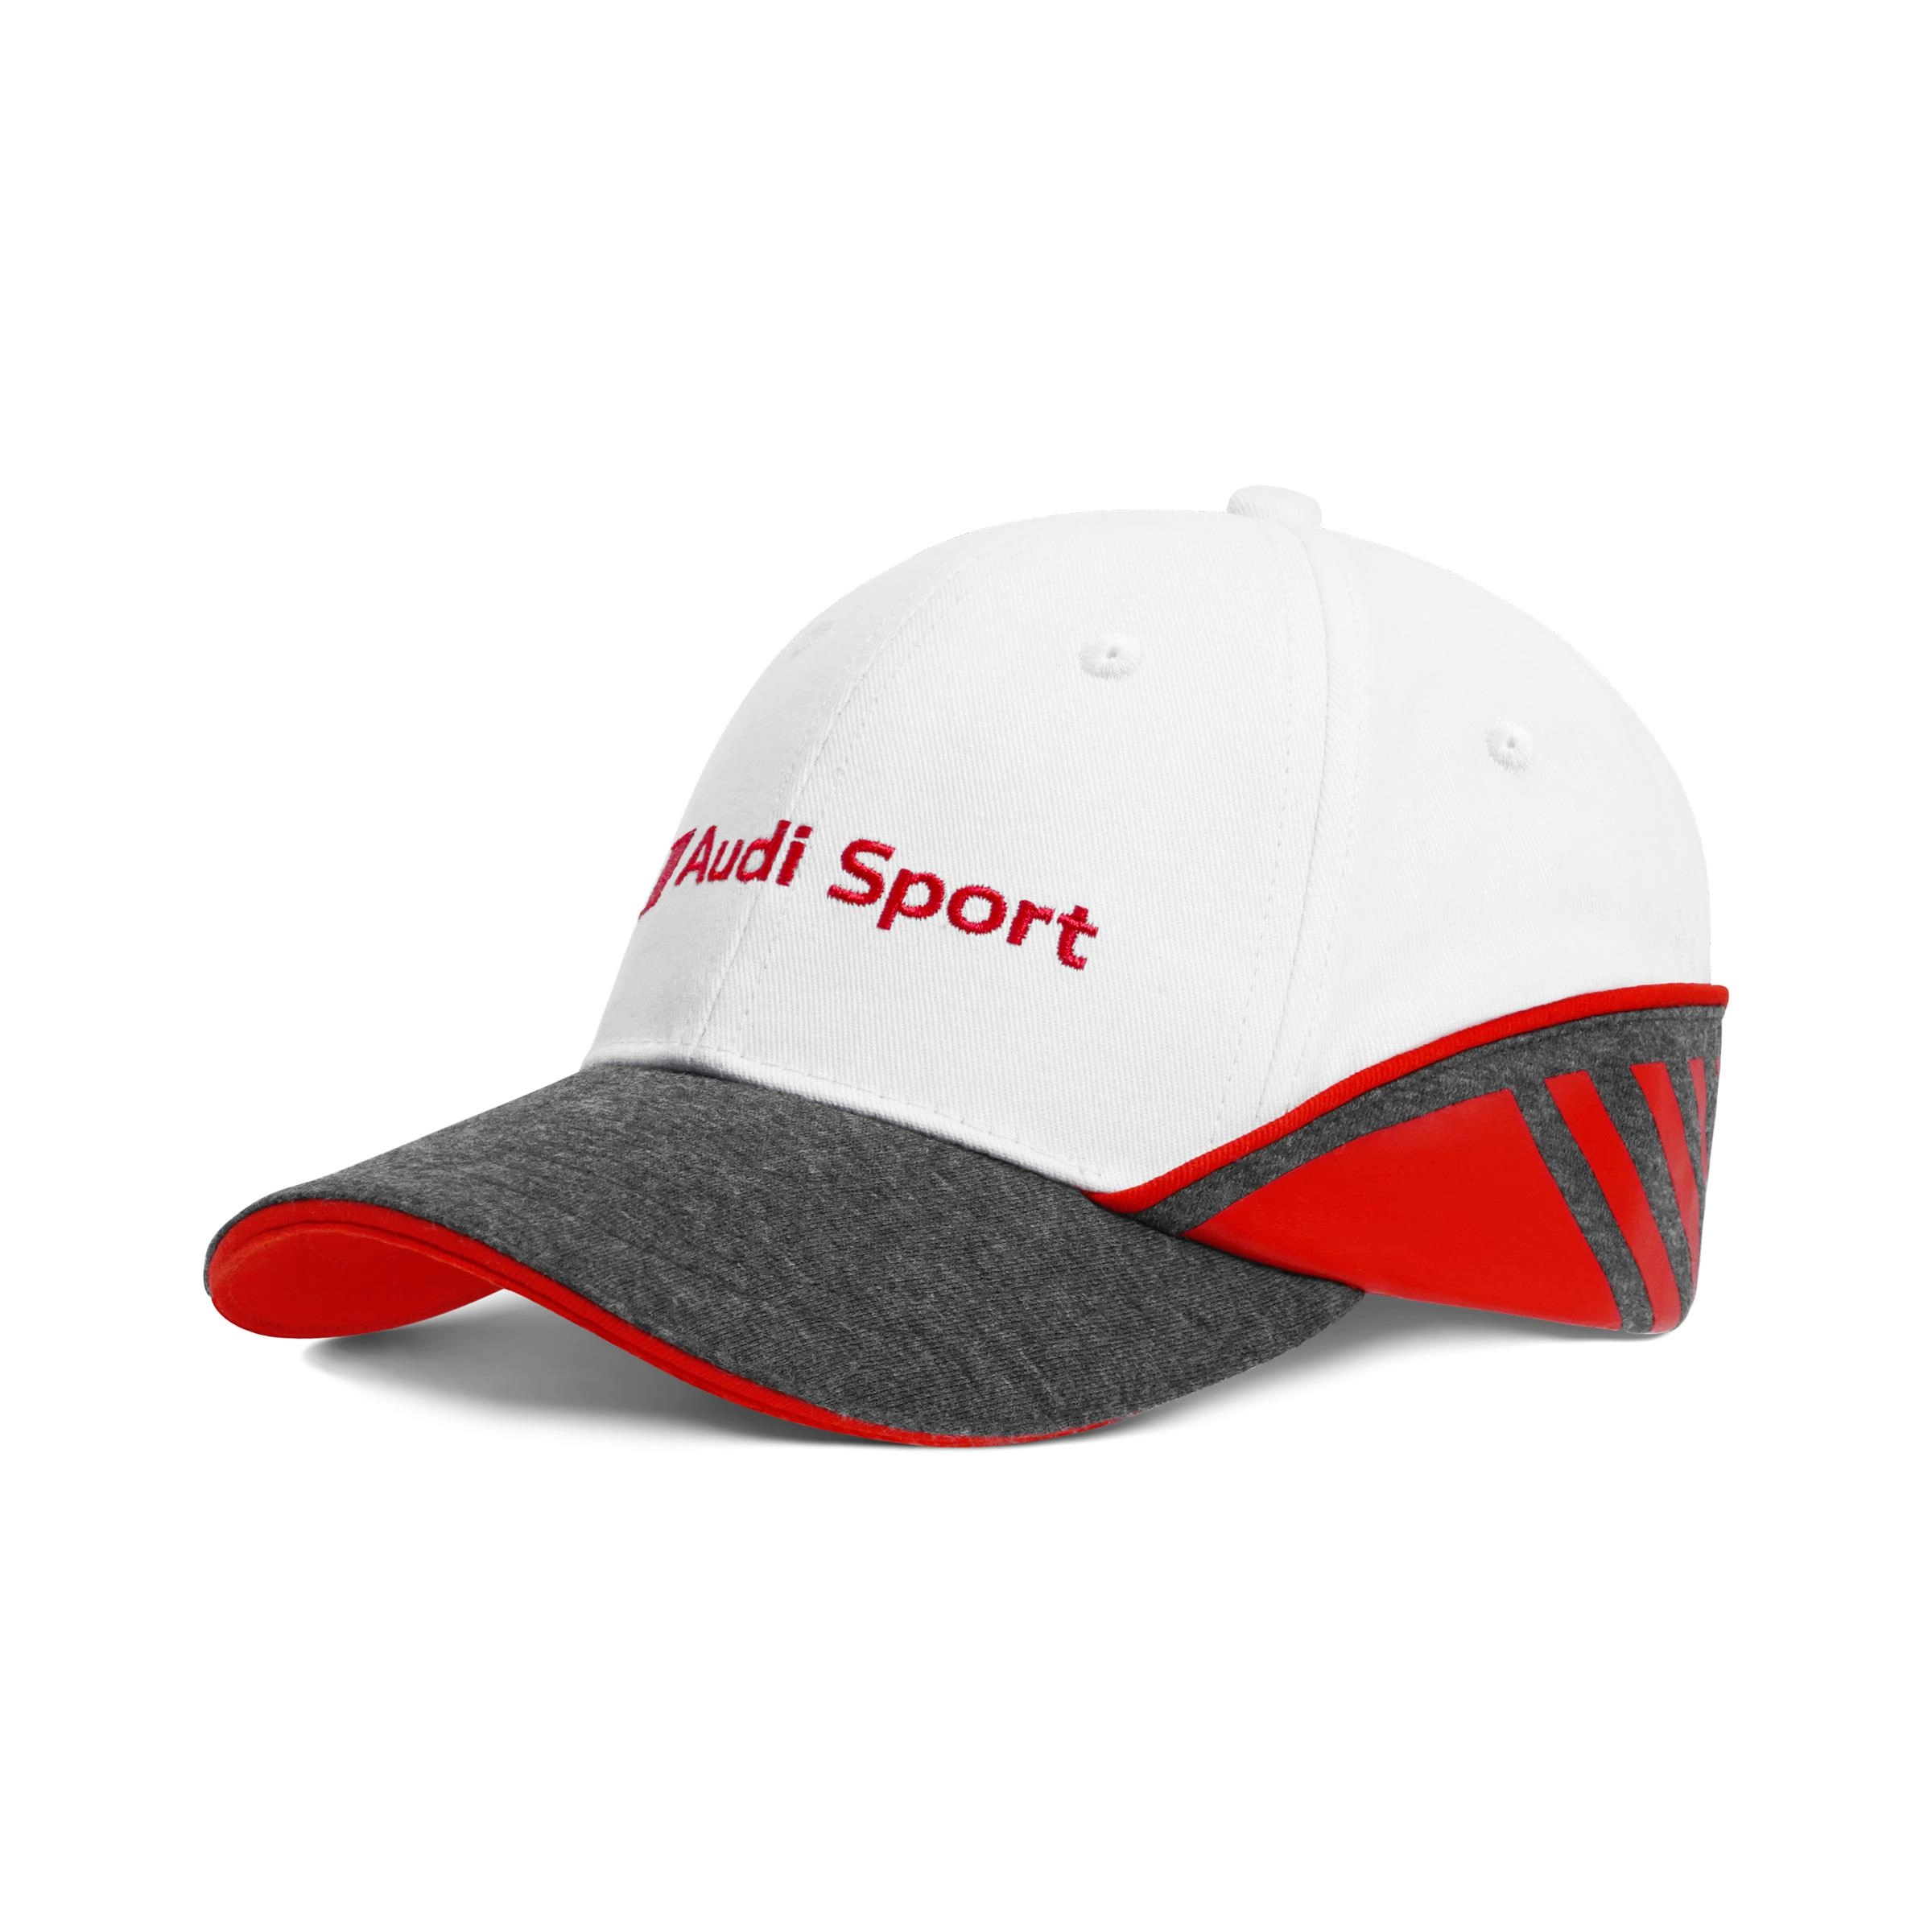 Audi Sport Kleinkinder Cap weiß/grau/rot Kappe Basecap 3202200600